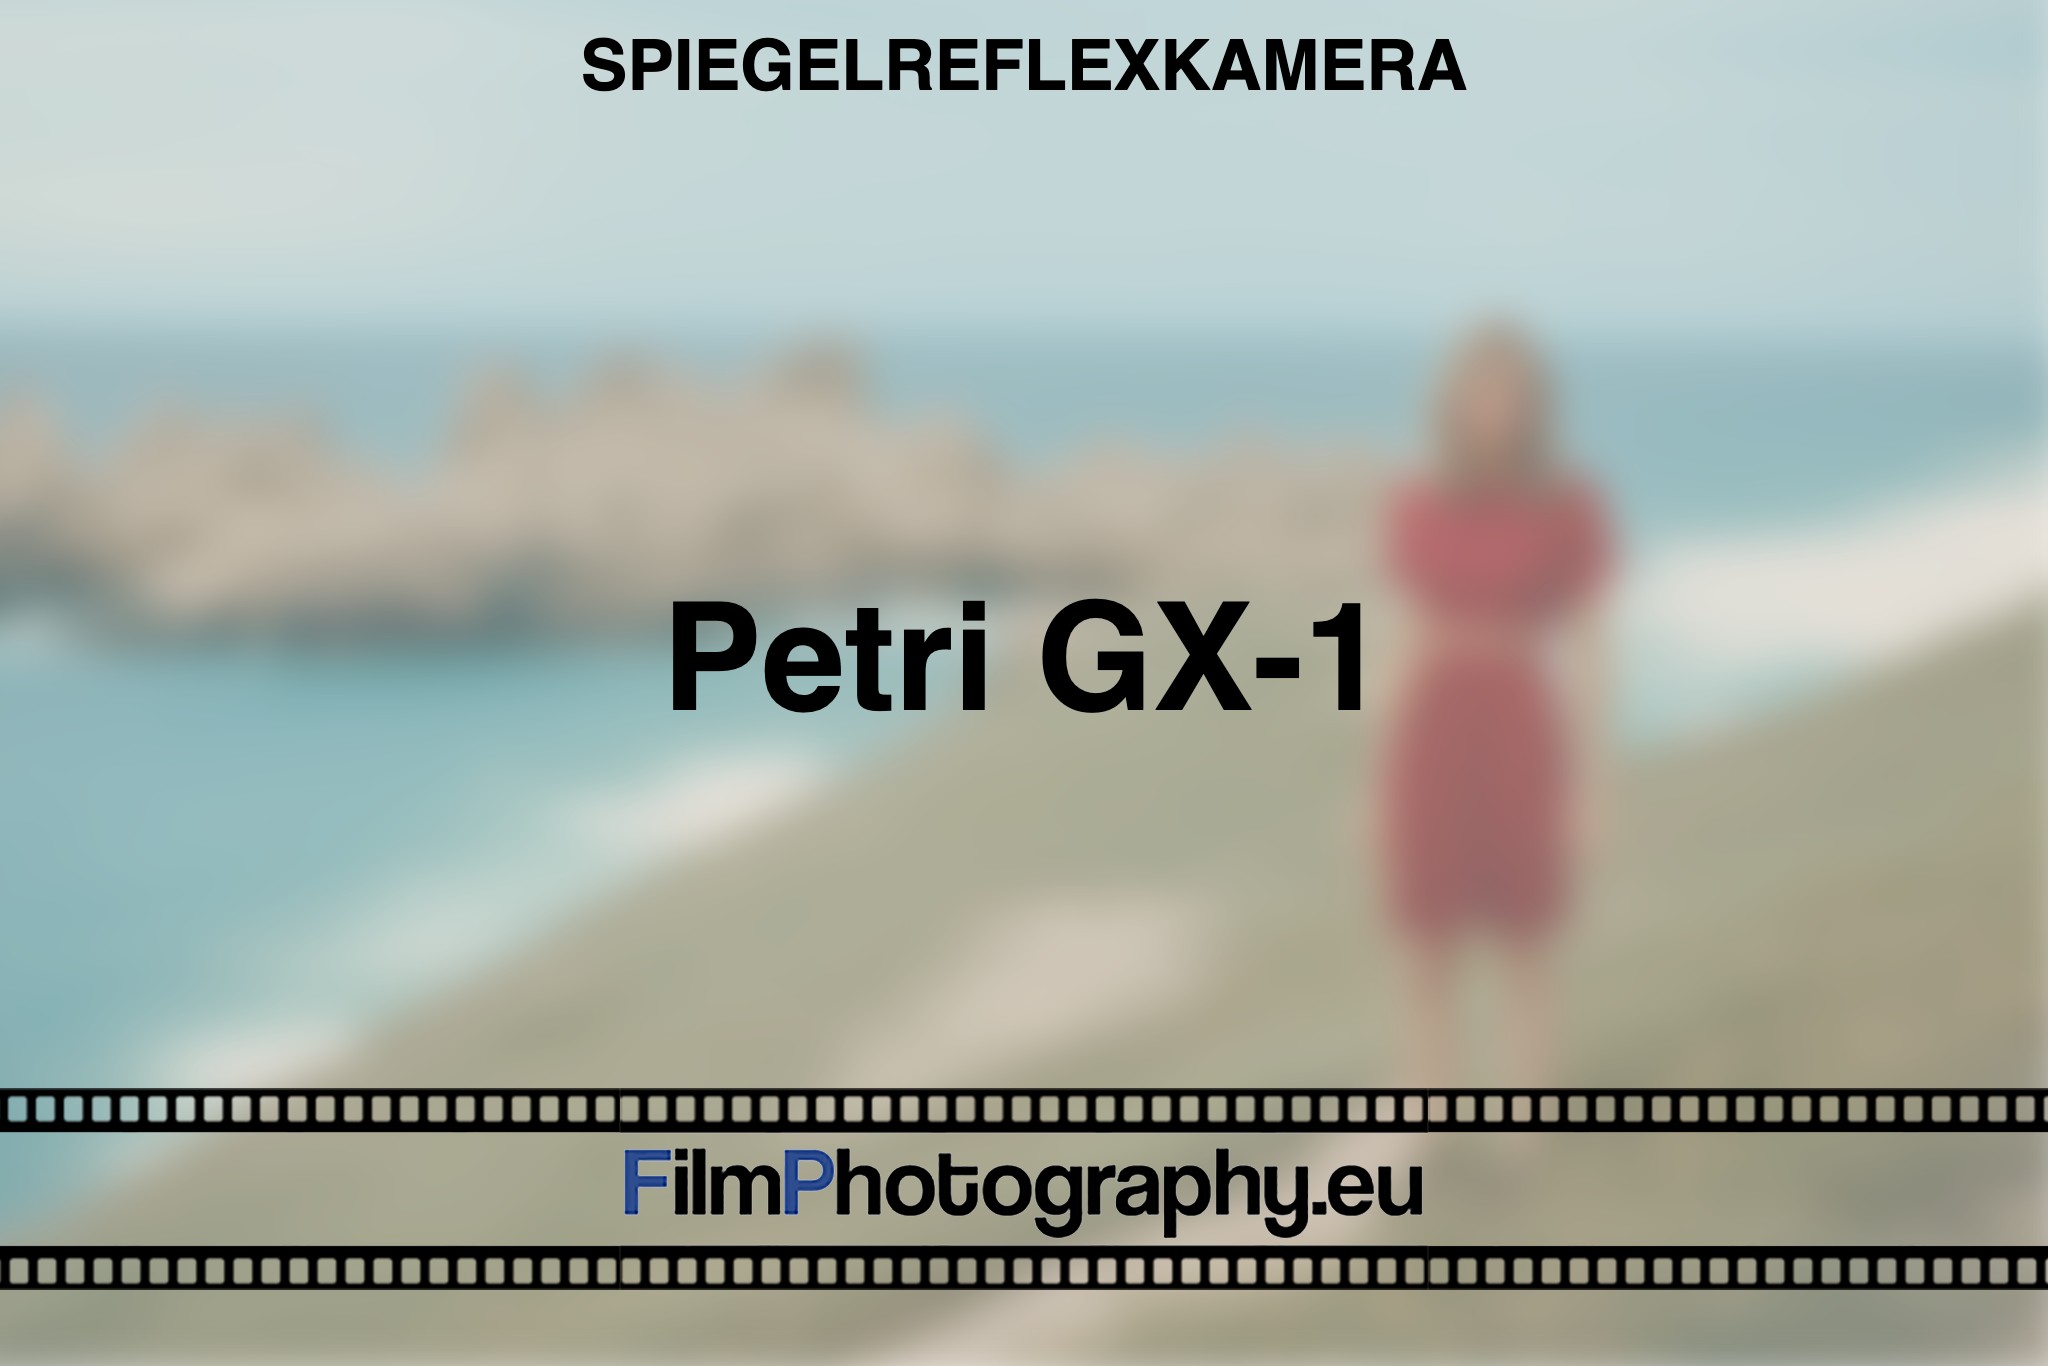 petri-gx-1-spiegelreflexkamera-bnv